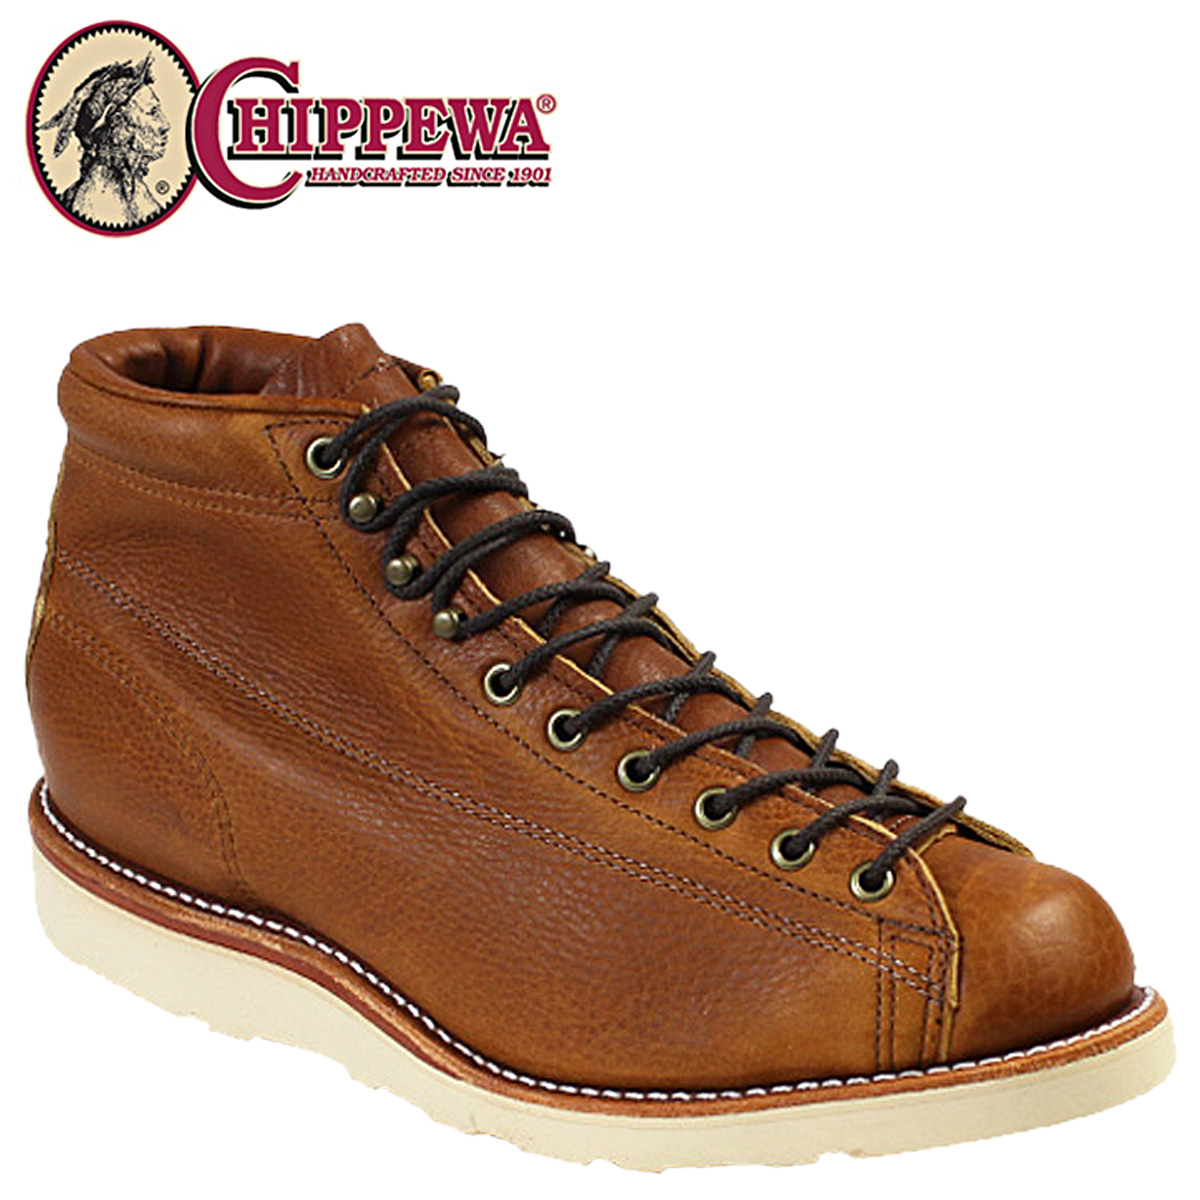 chippewa bridgeman boots